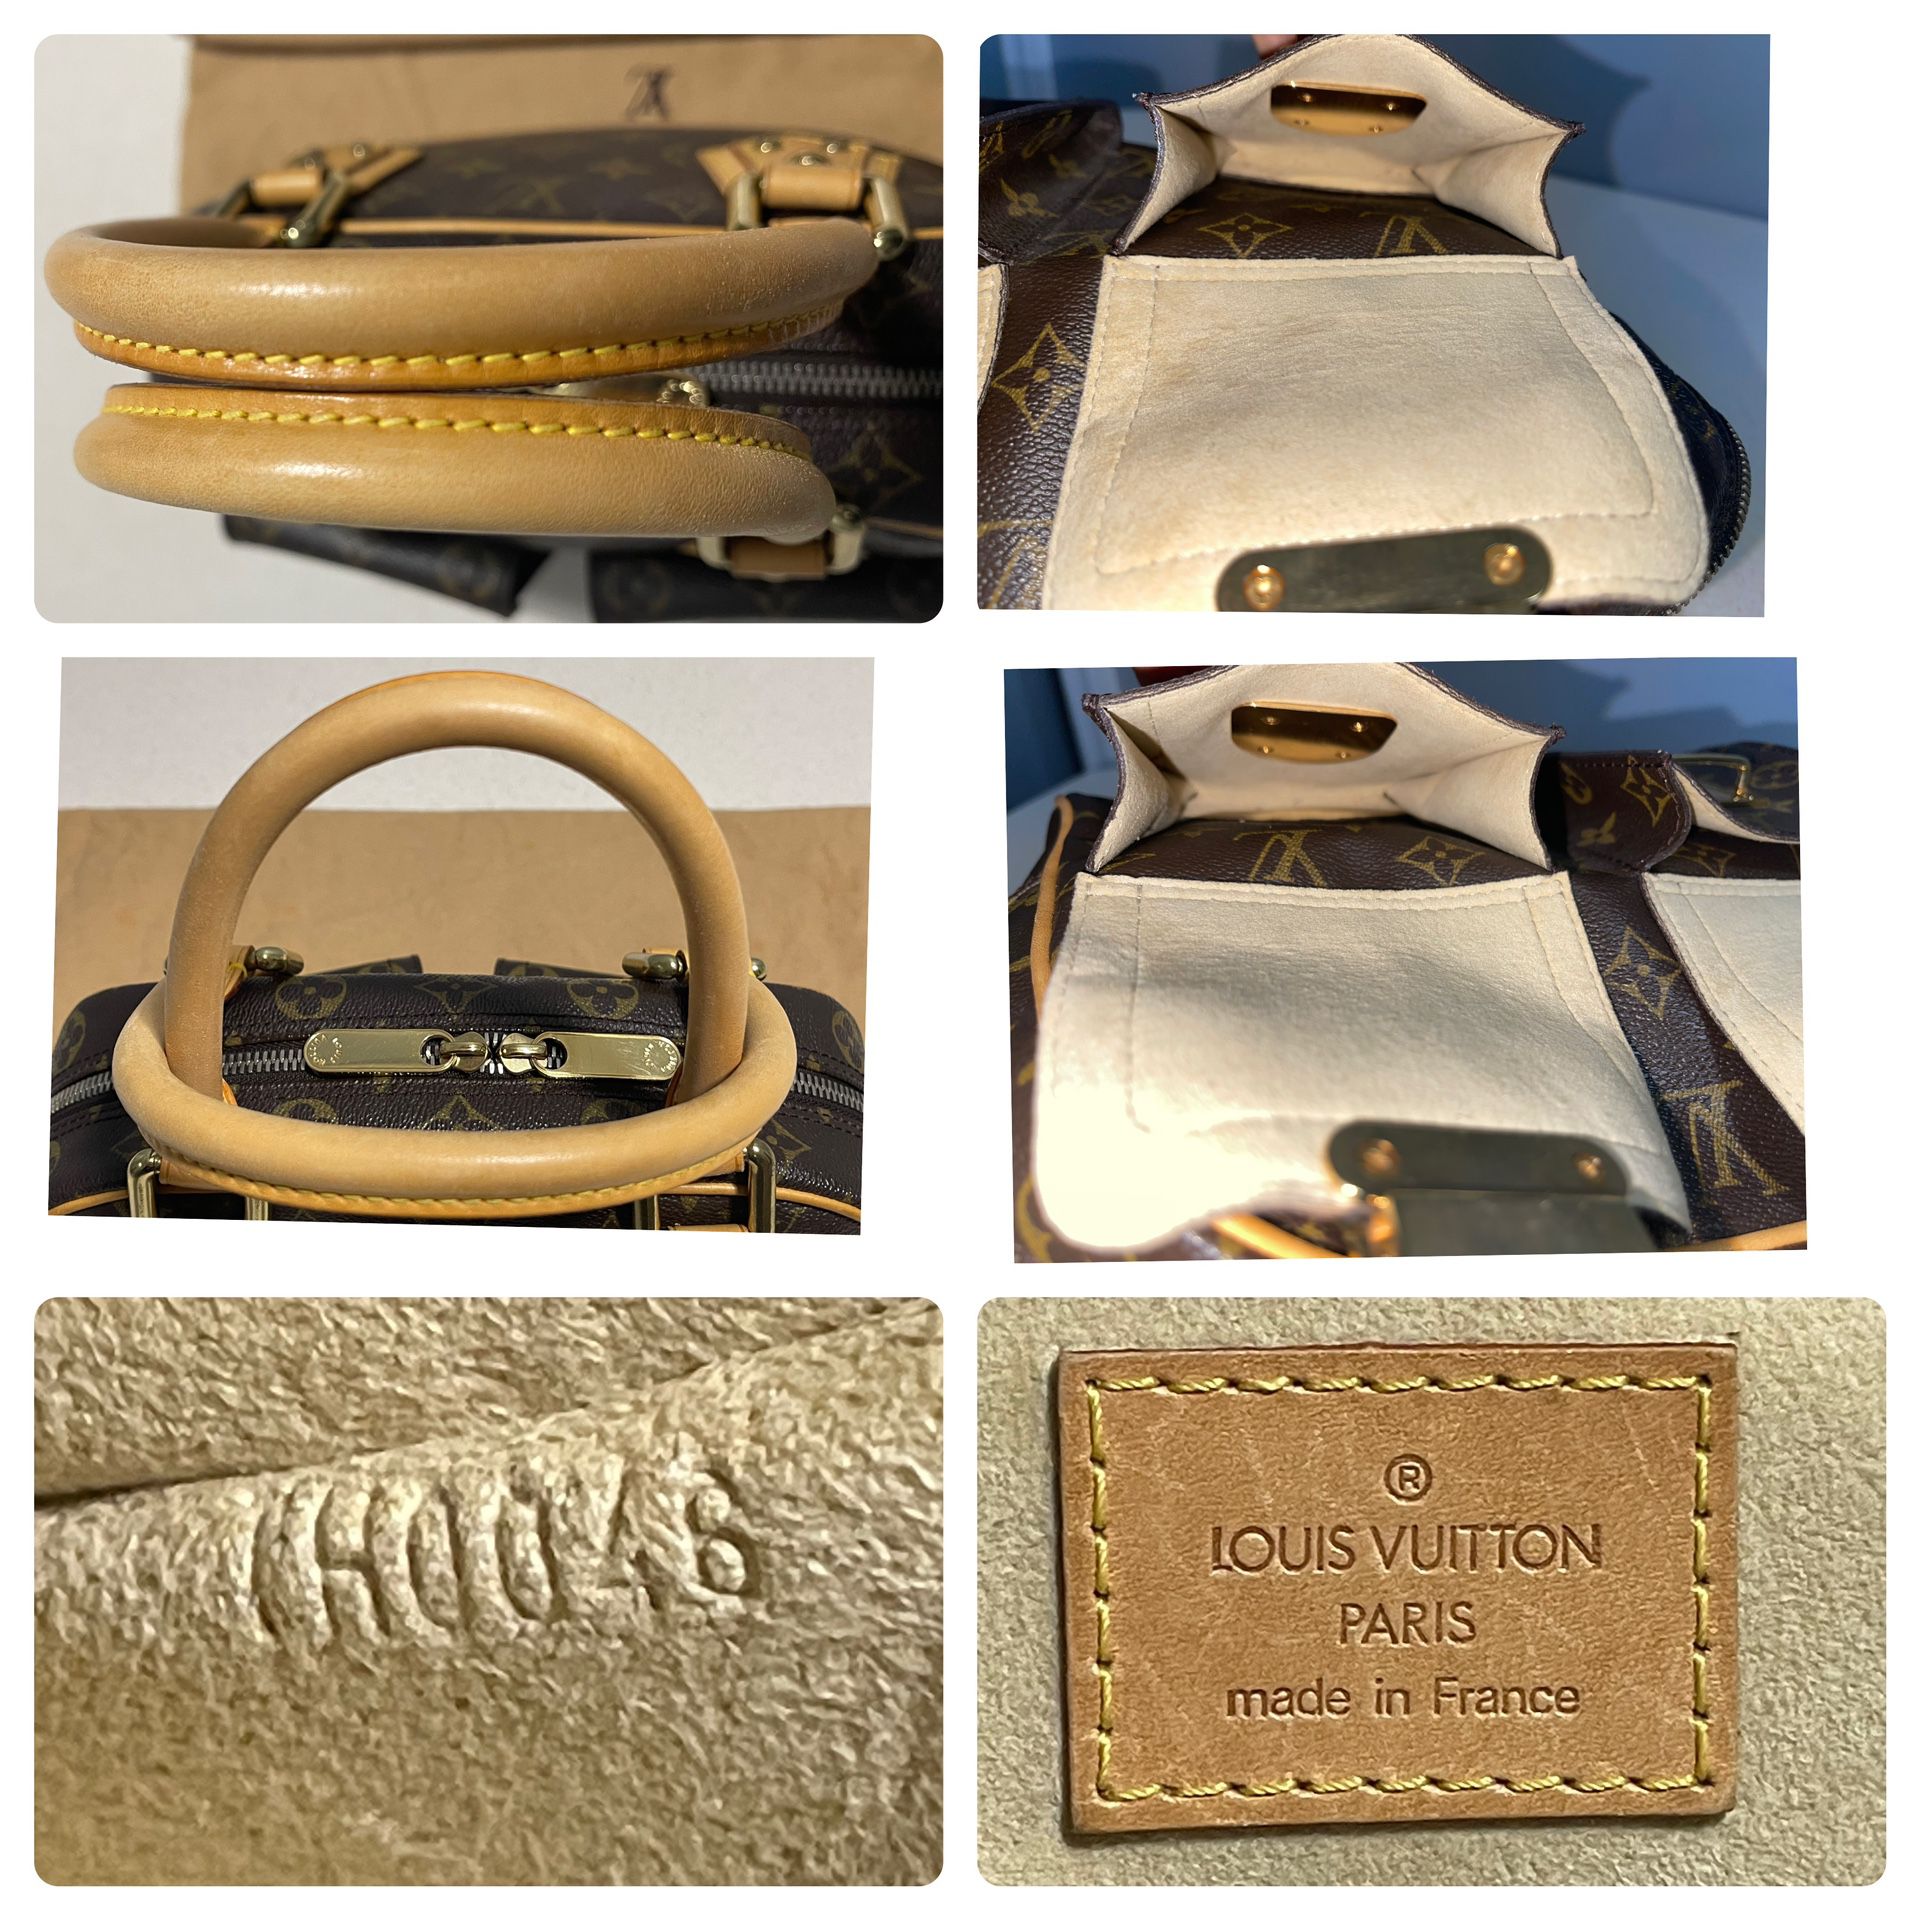 100% AuthLOUIS VUITTON Monogram Canvas Manhattan GM Handbag M40025  Authentic Purse Bag Lv for Sale in Jersey City, NJ - OfferUp